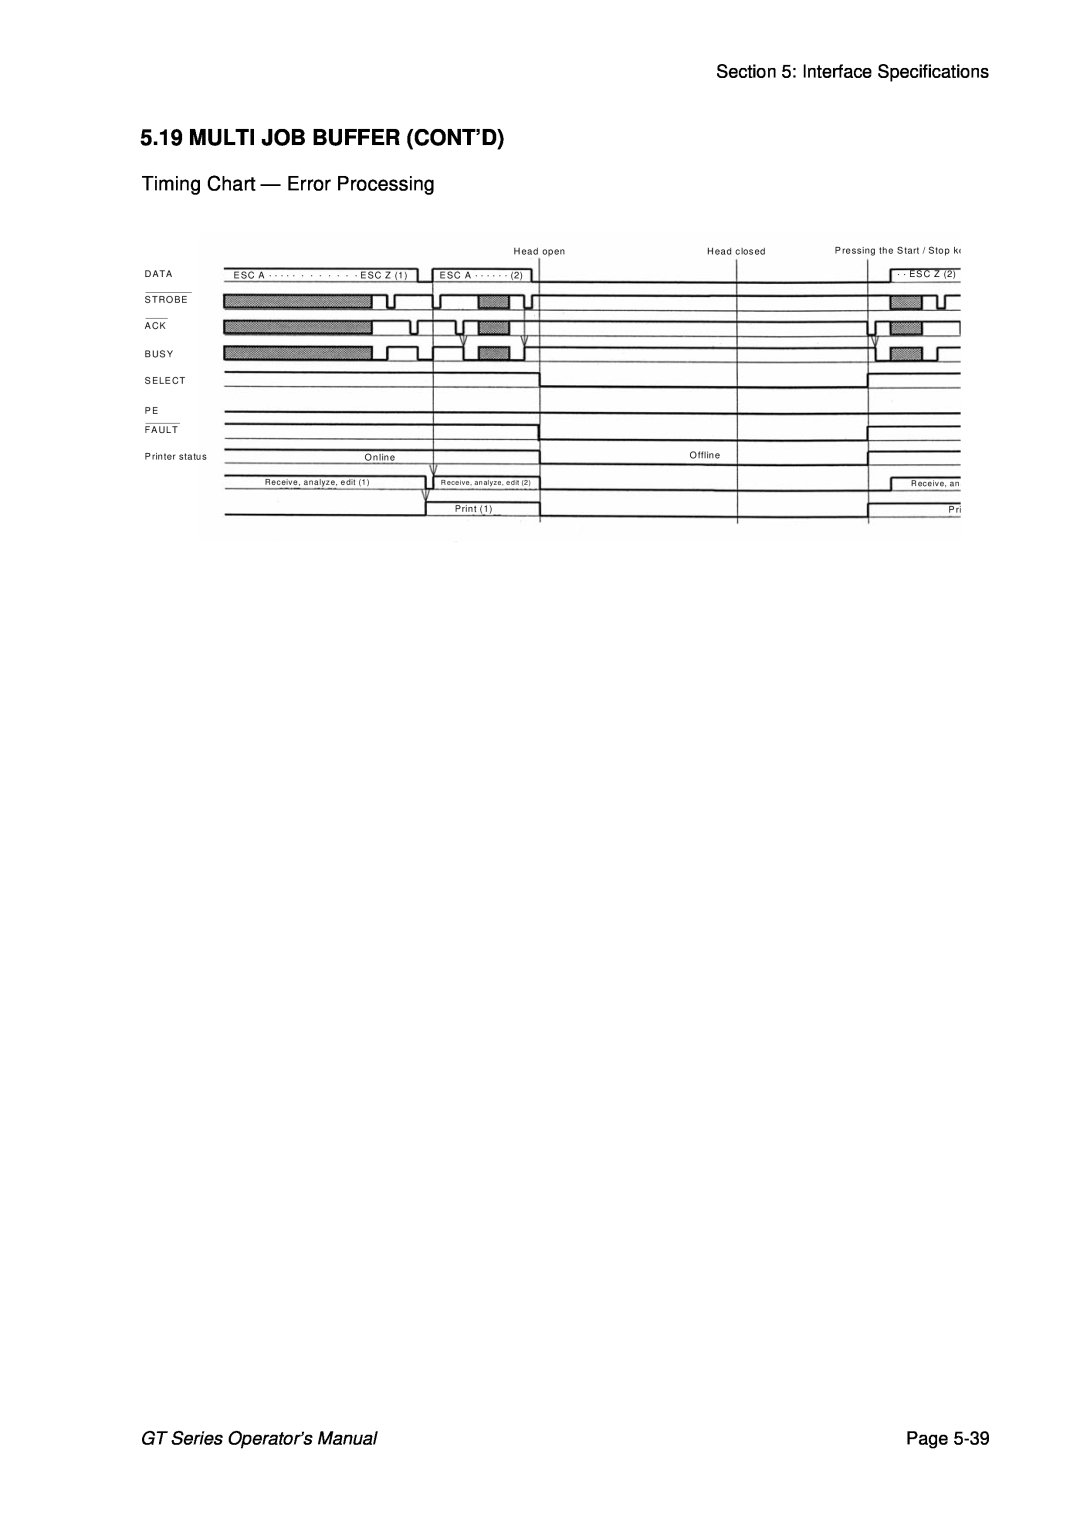 SATO GT424 manual Multi Job Buffer Cont’D, GT Series Operator’s Manual, Page, R eceive, an alyze, e dit 